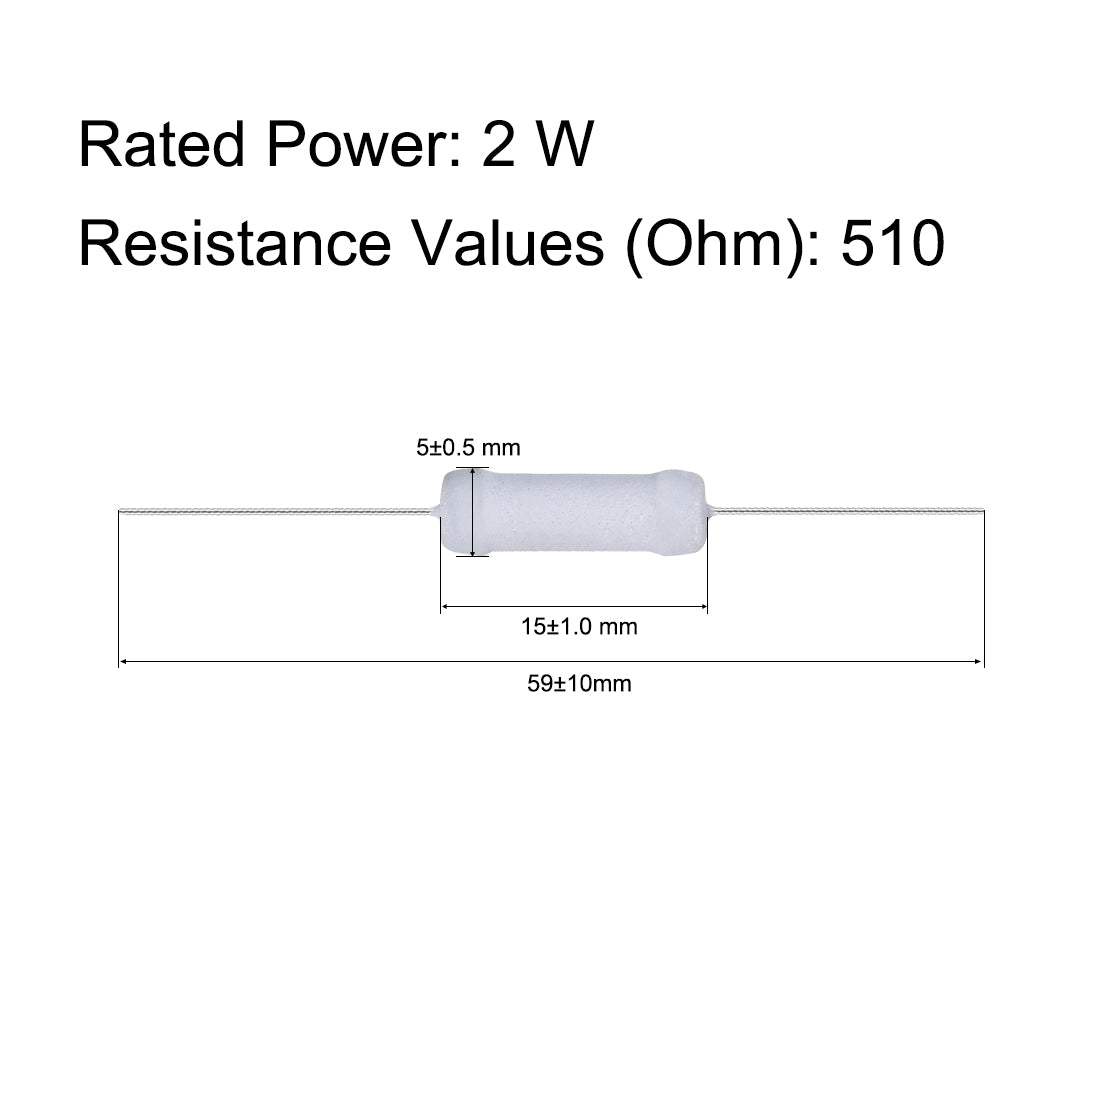 uxcell Uxcell 60pcs 2W 2 Watt Metal Oxide Film Resistor Axile Lead 510 Ohm ±5% Tolerance